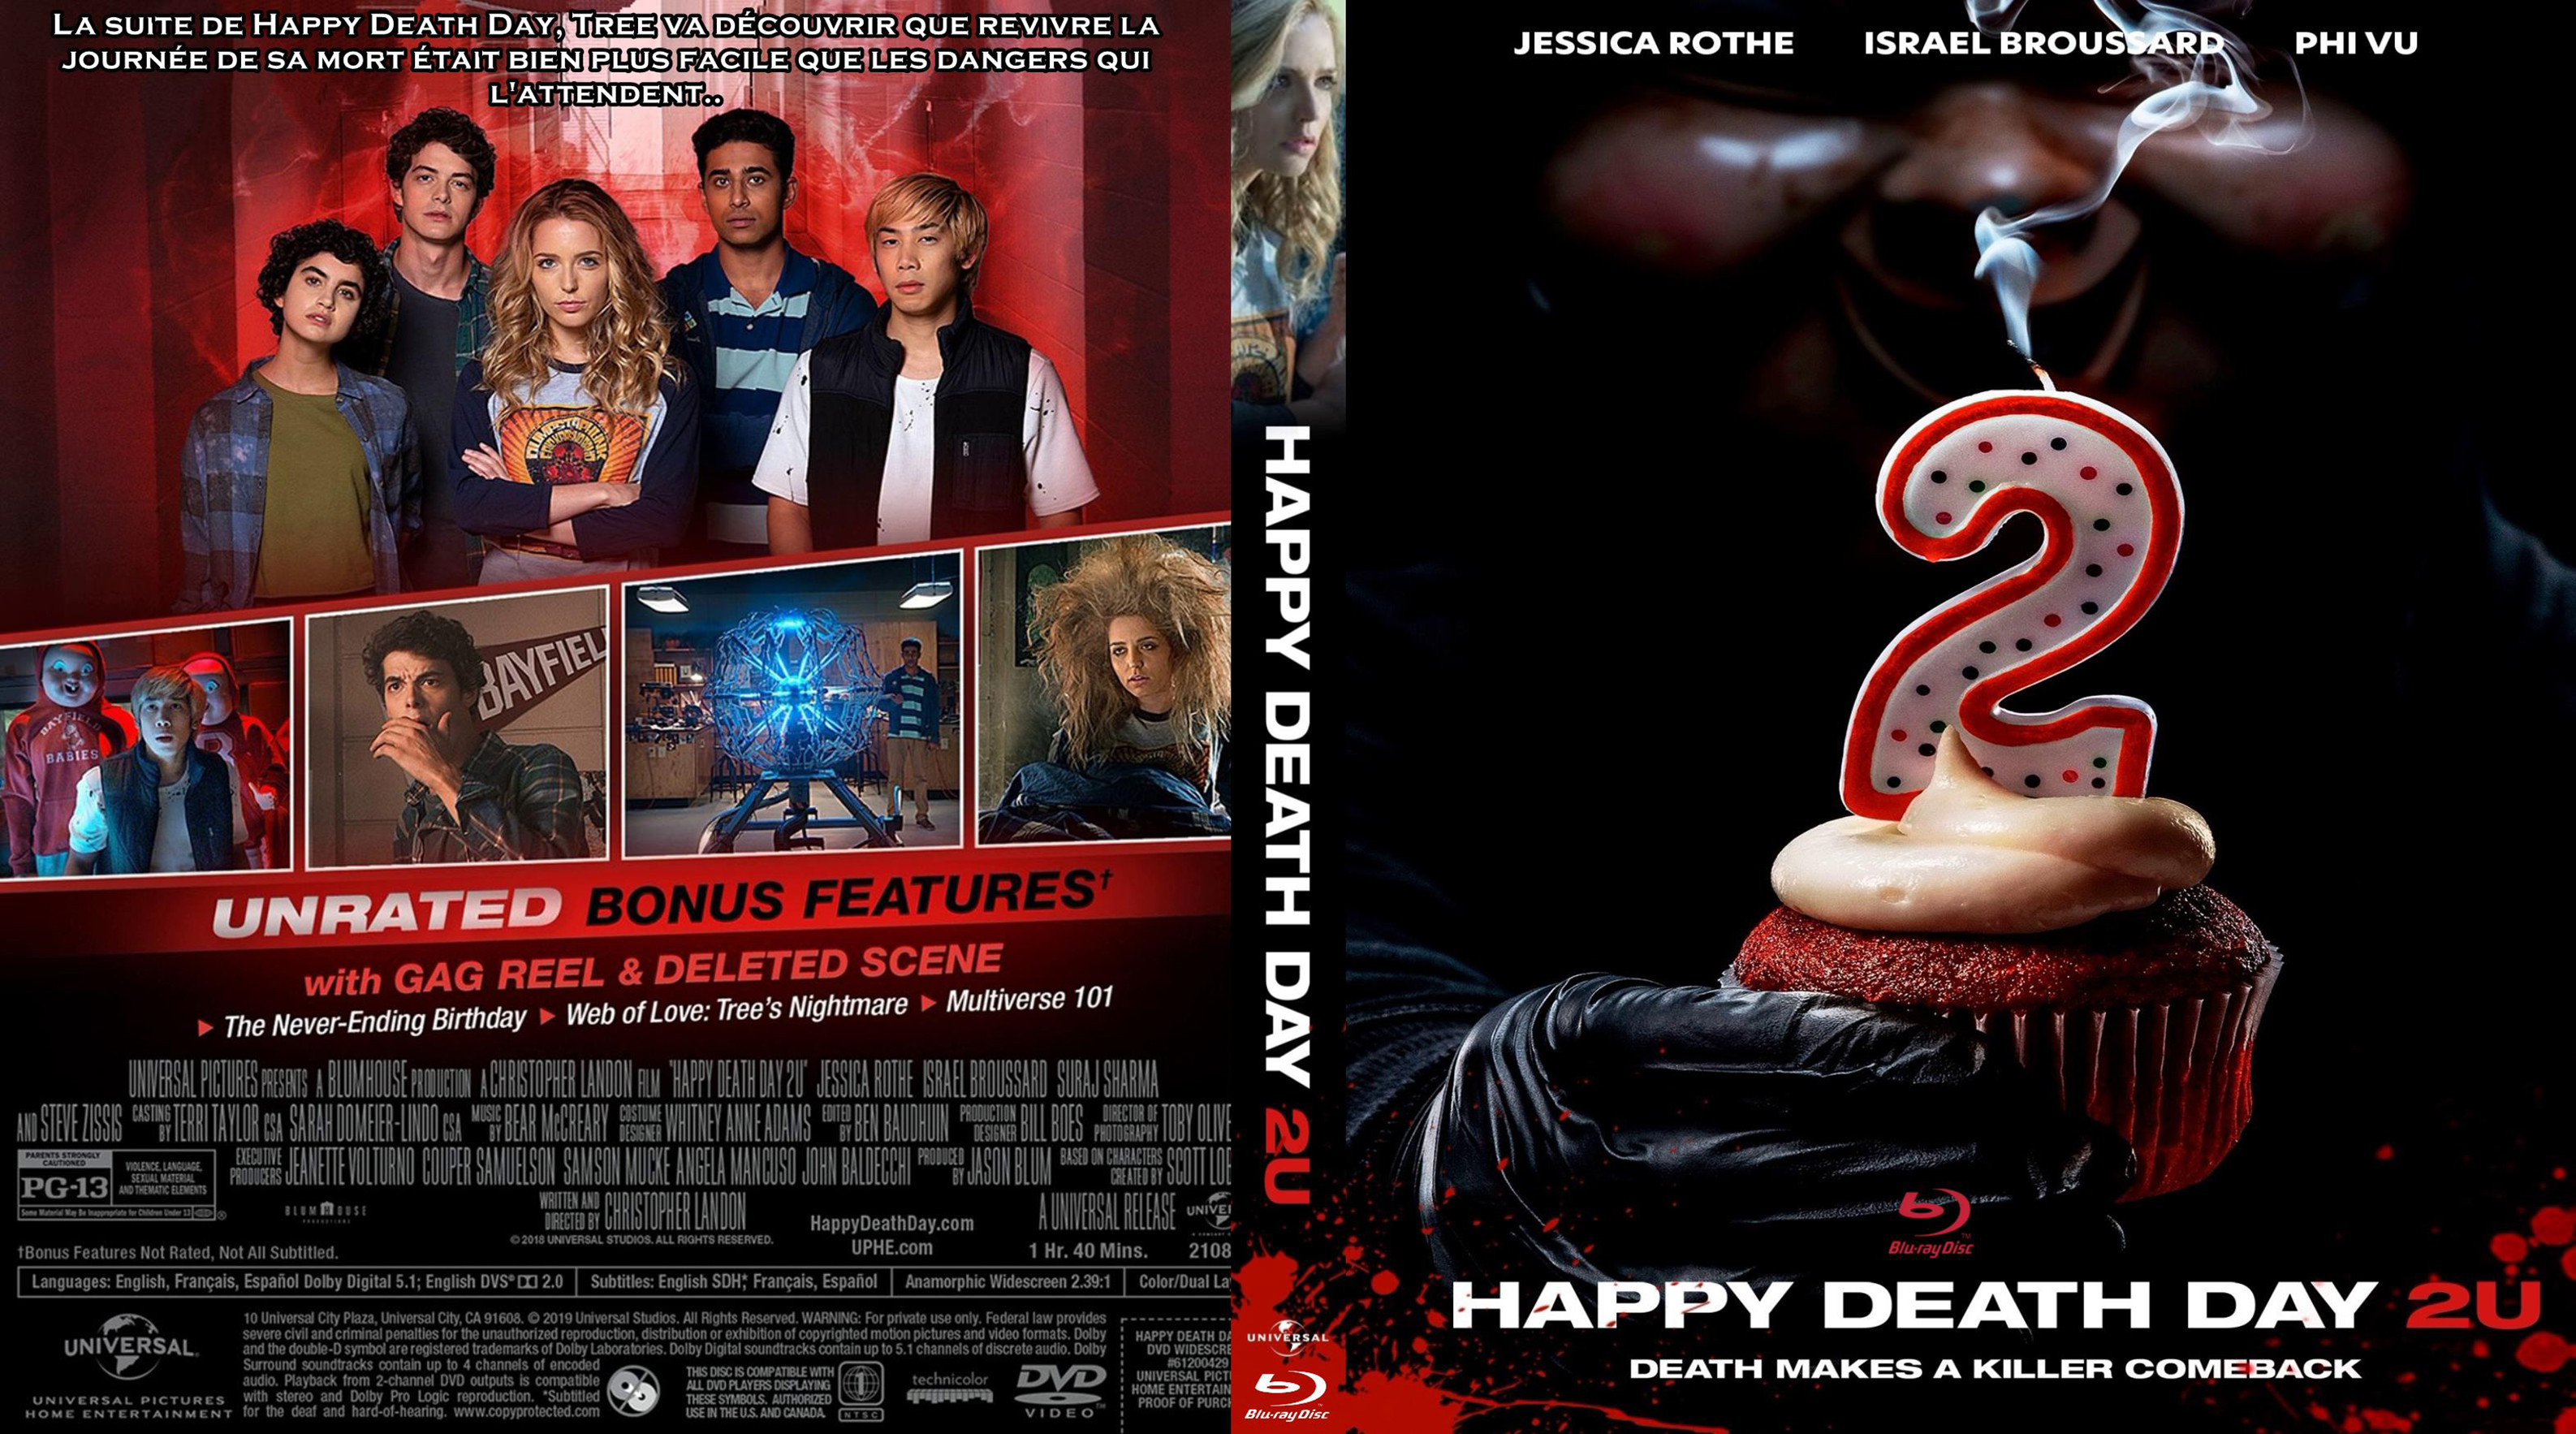 Jaquette DVD Happy death day 2 custom (BLU-RAY)